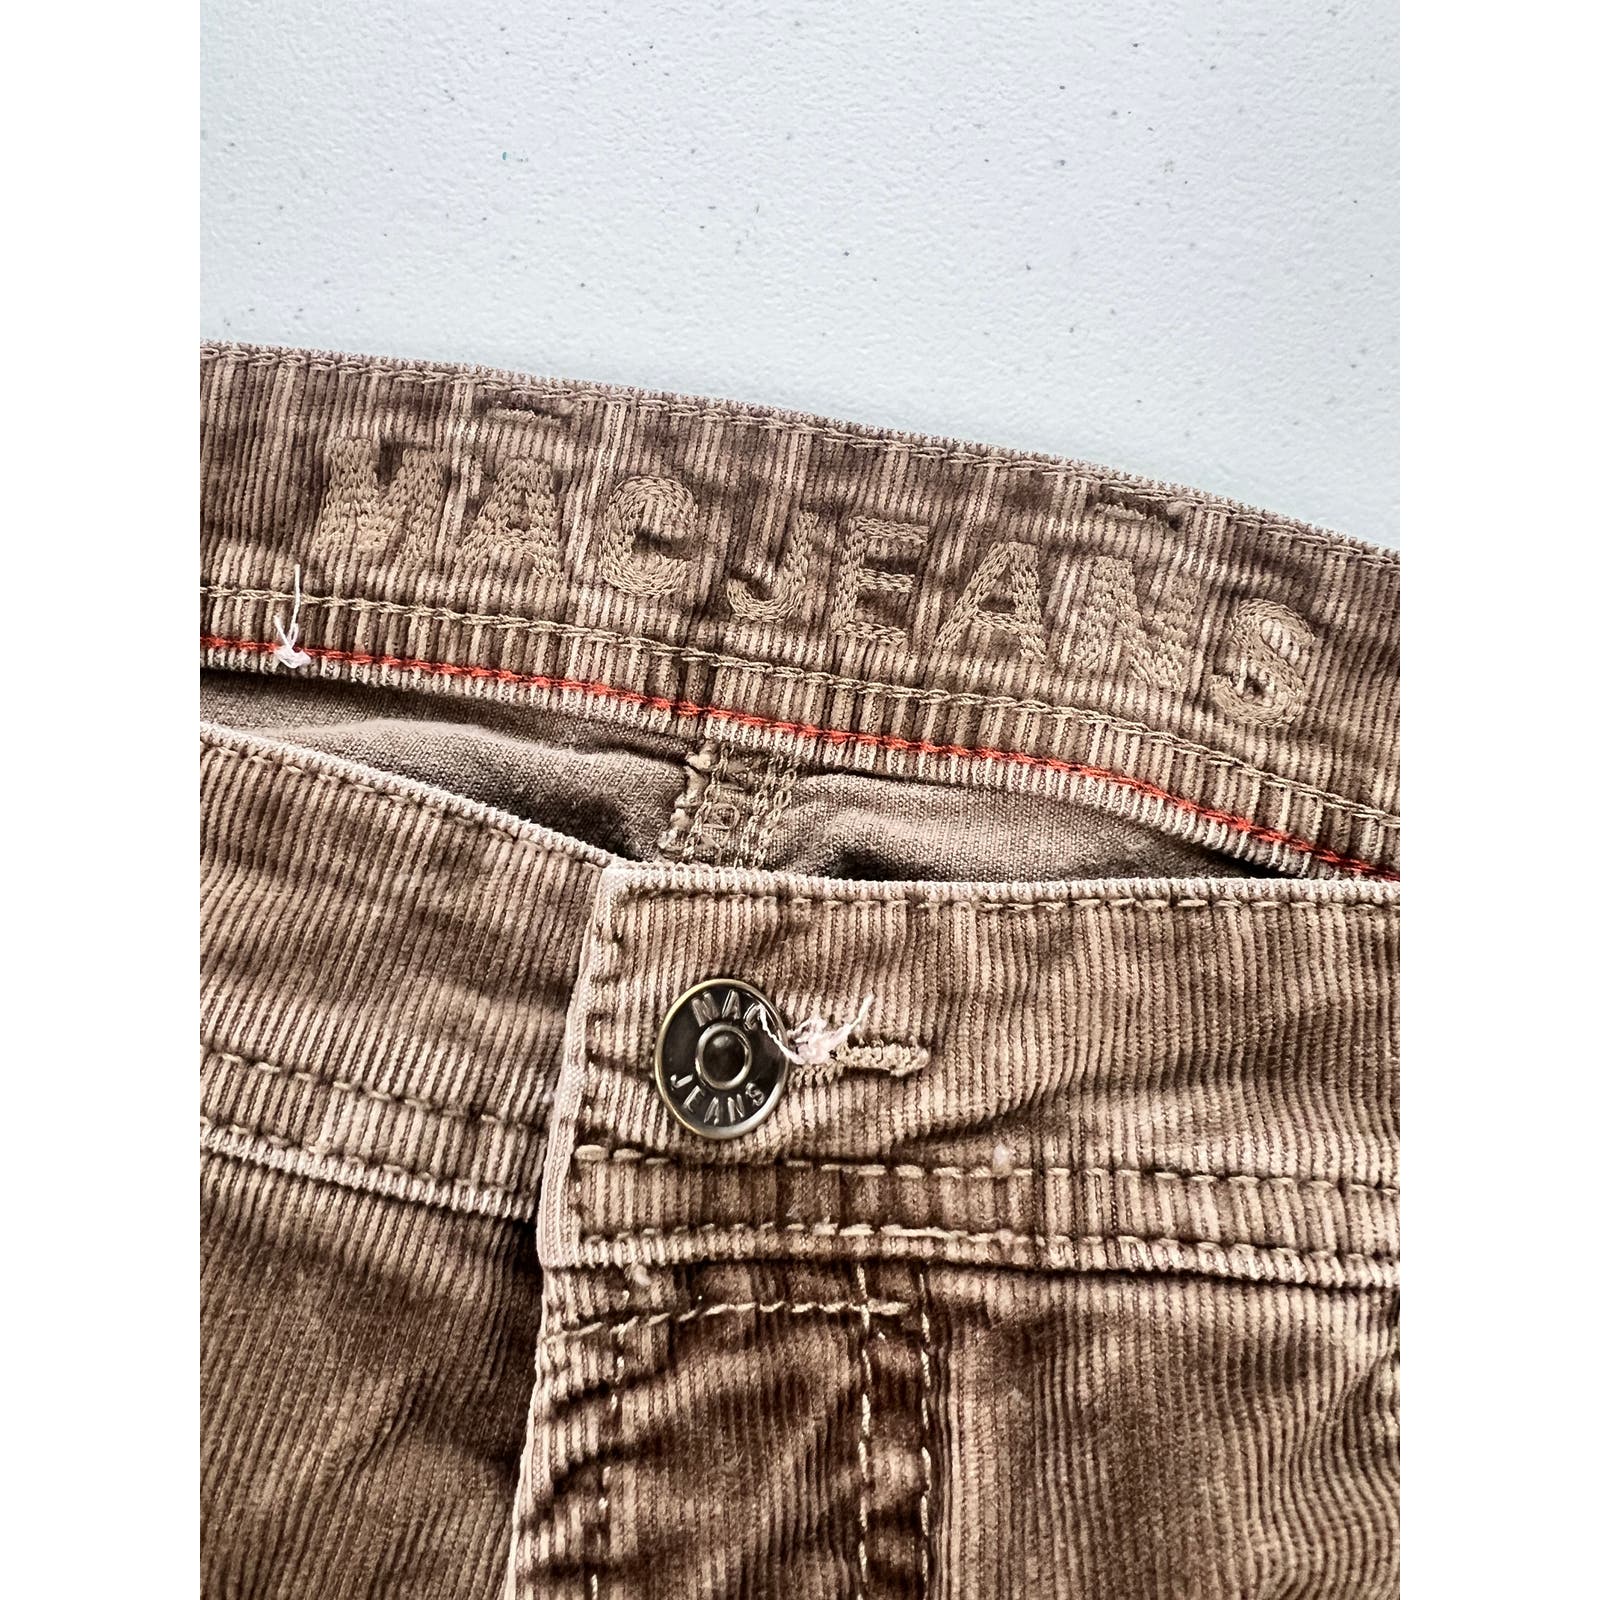 MAC Jeans Arne Pipe Corduroy Pants Mens 36x32 Stretch Tan Vintage Wash Straight